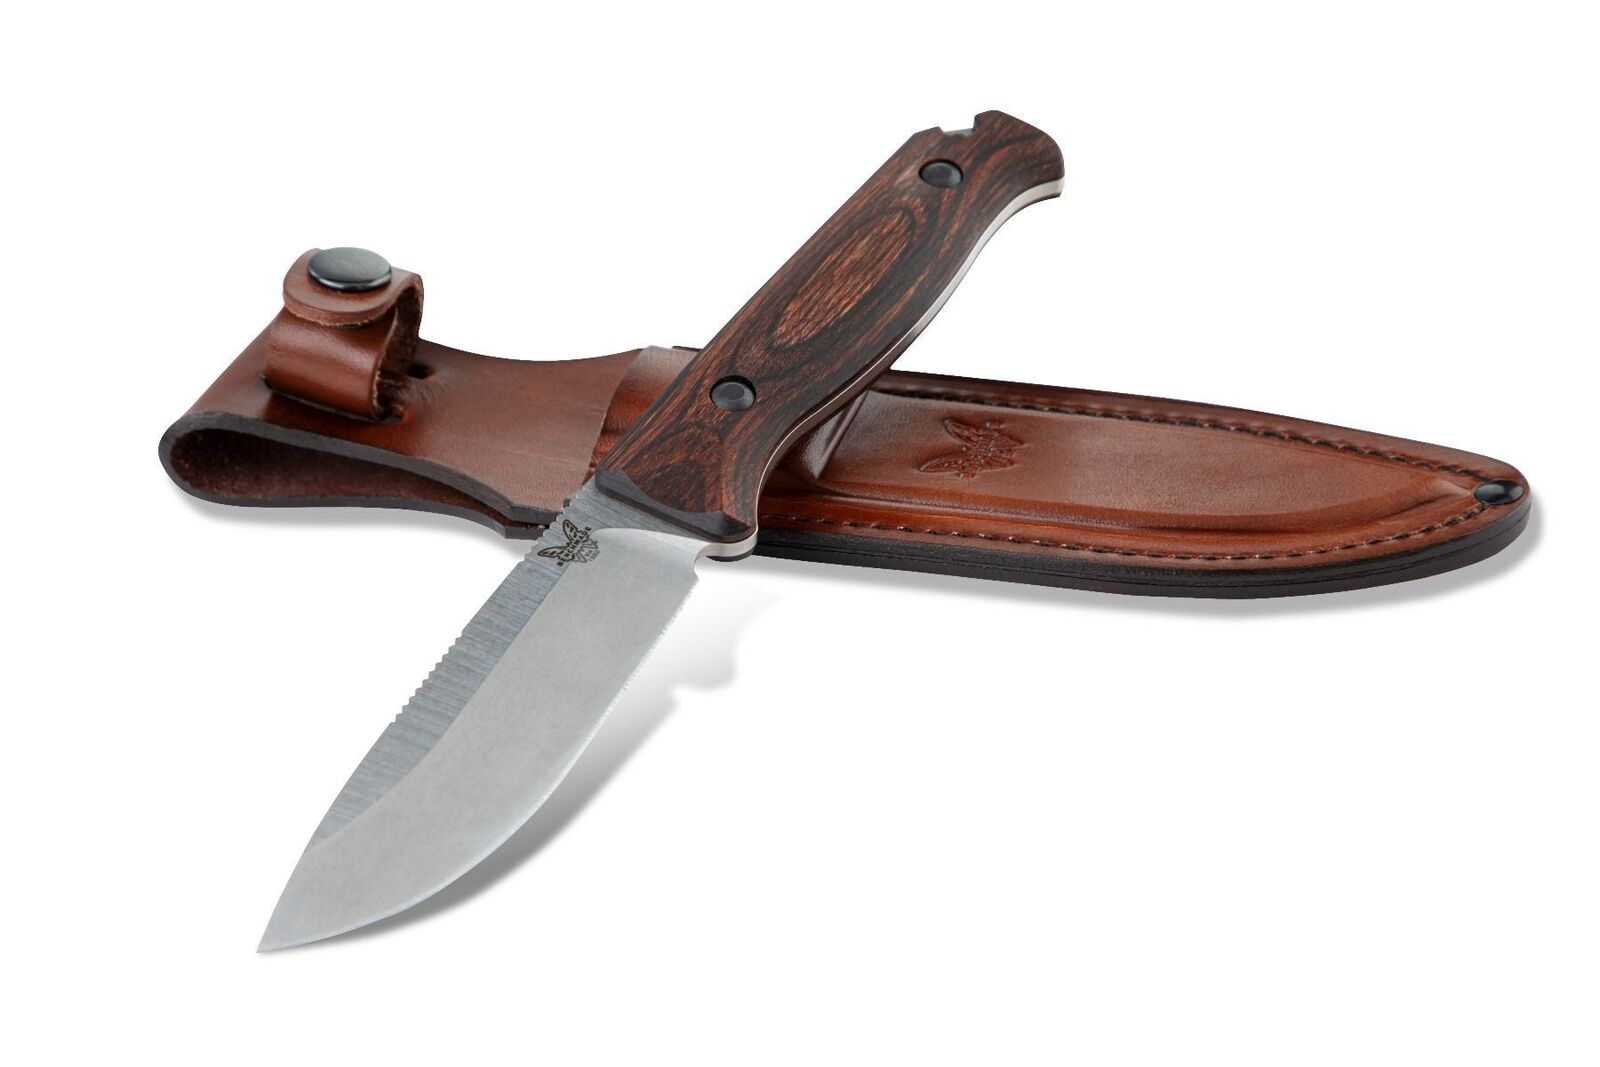 BENCHMADE Saddle Mountain Skinner Fixed Blade 15002 Knife CPM-S30V Stainless